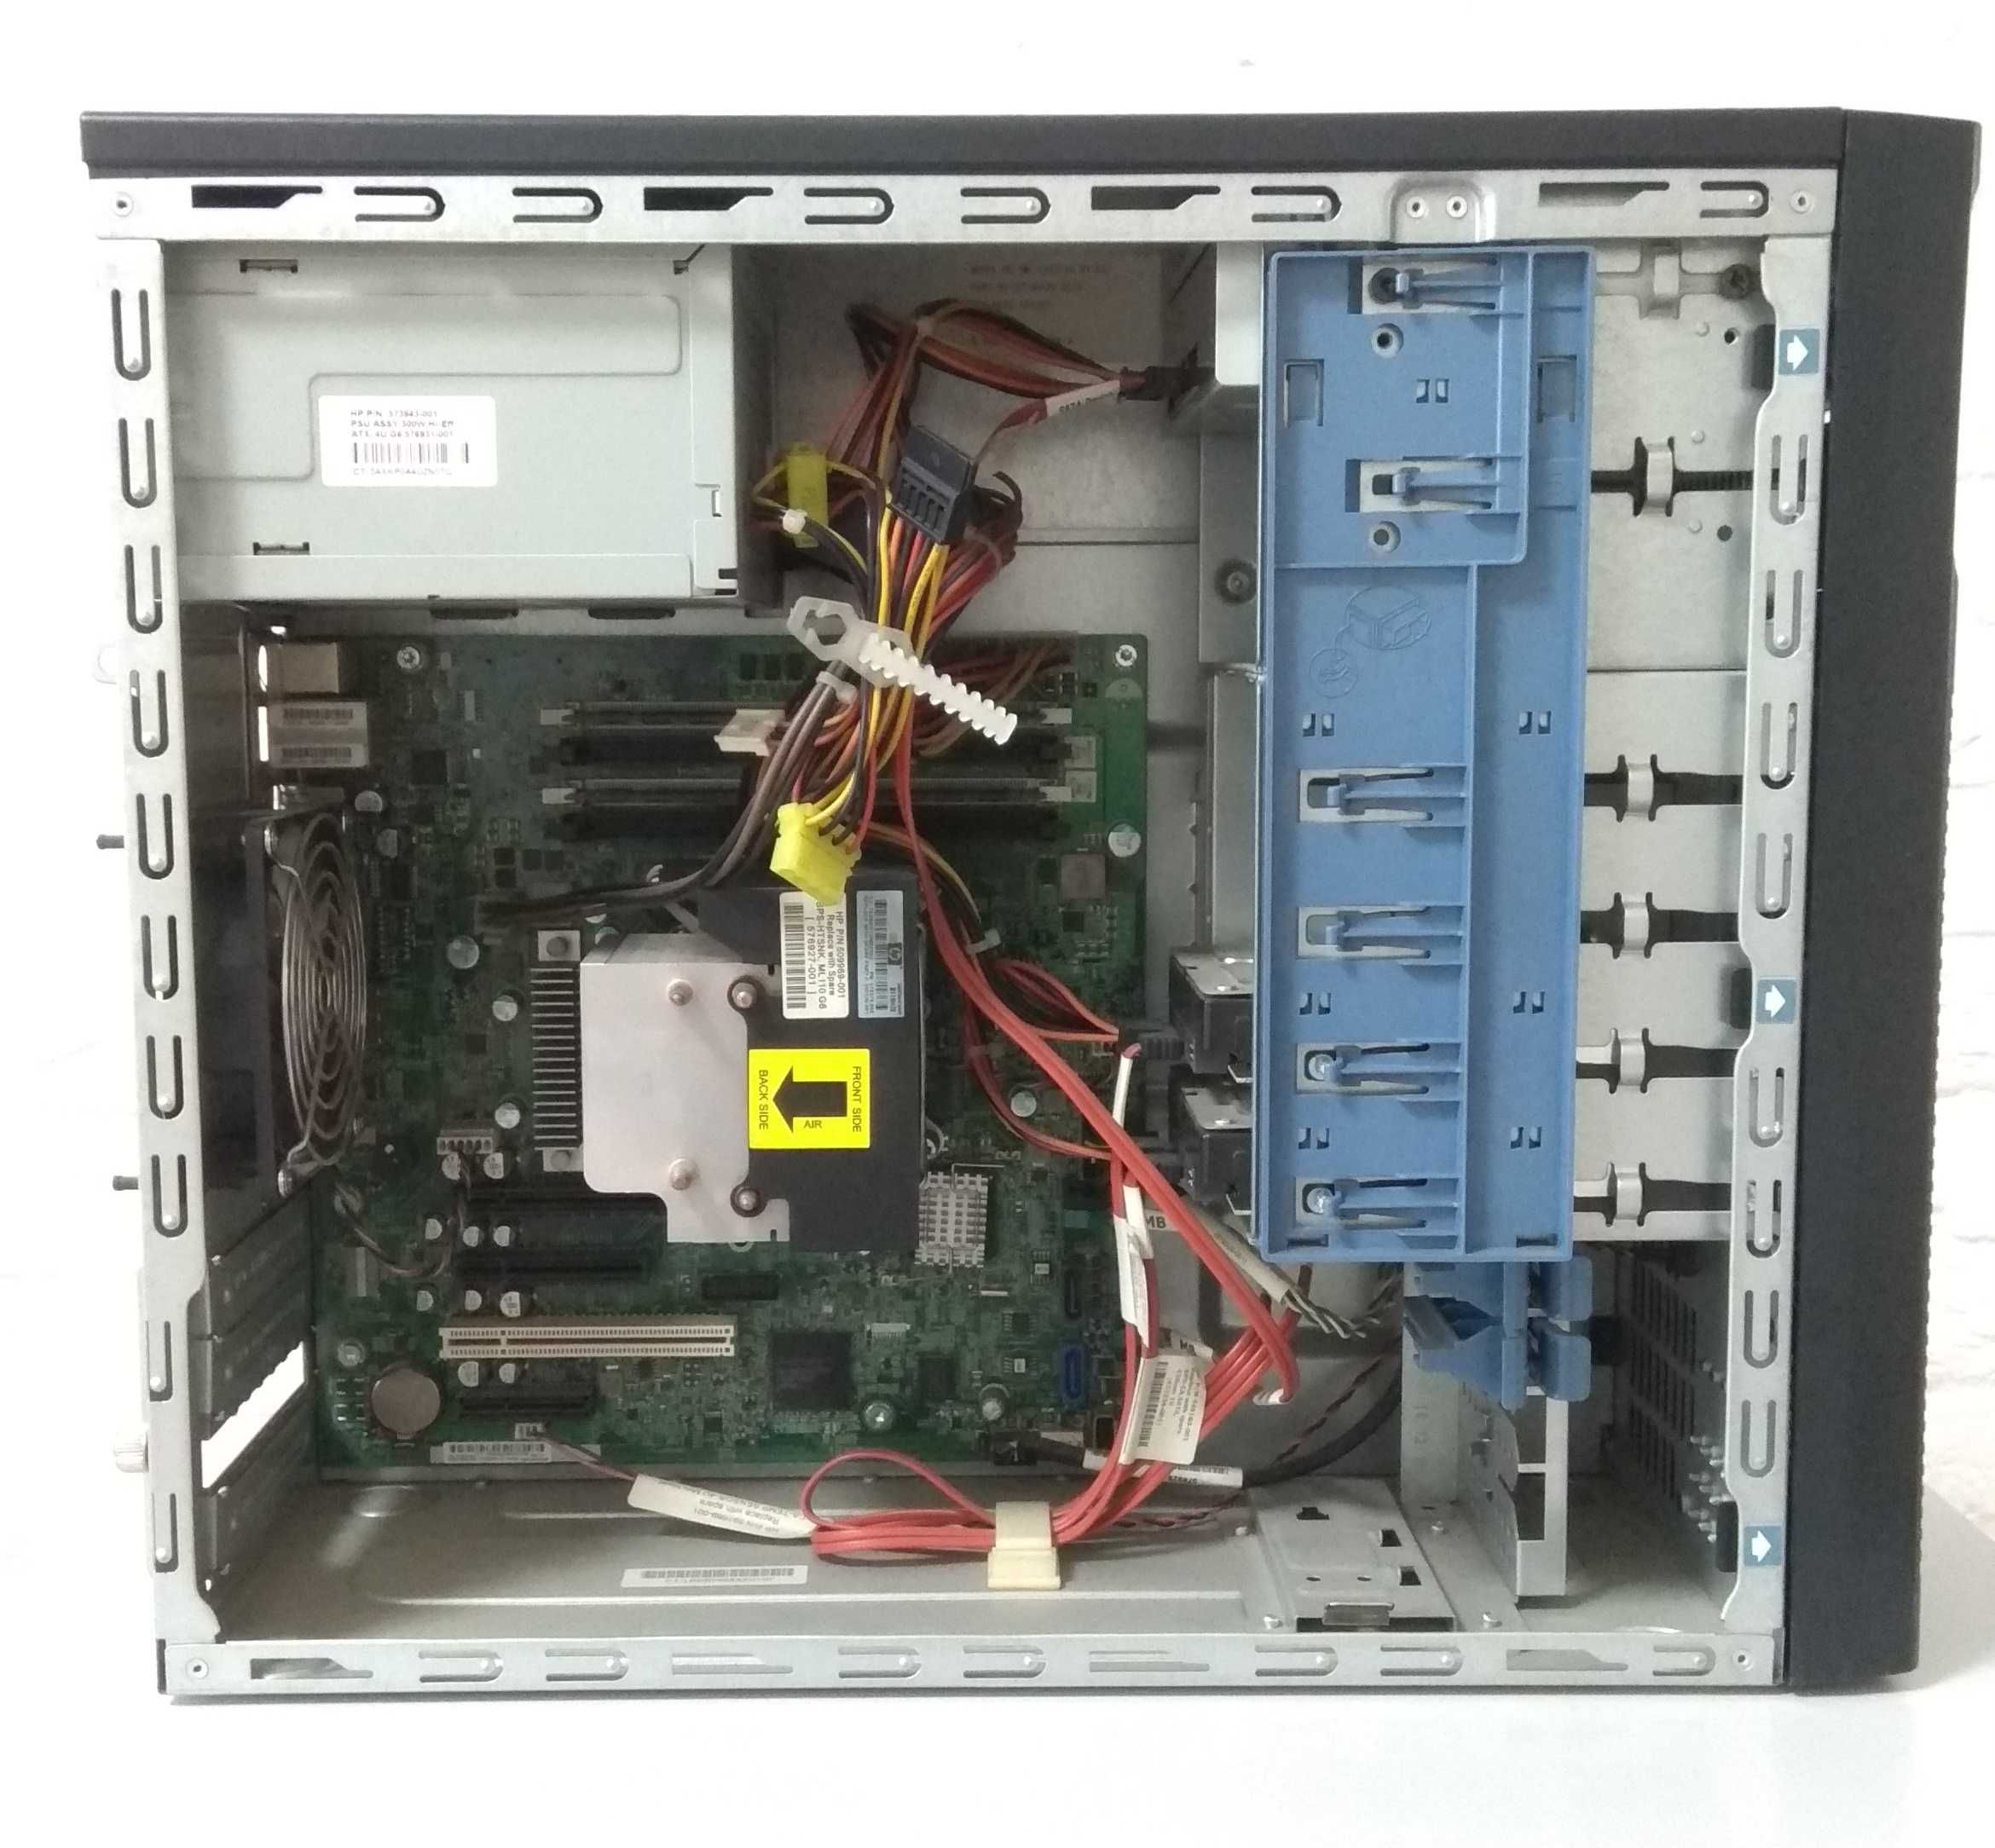 Сервер HP ProLiant ML110 G6